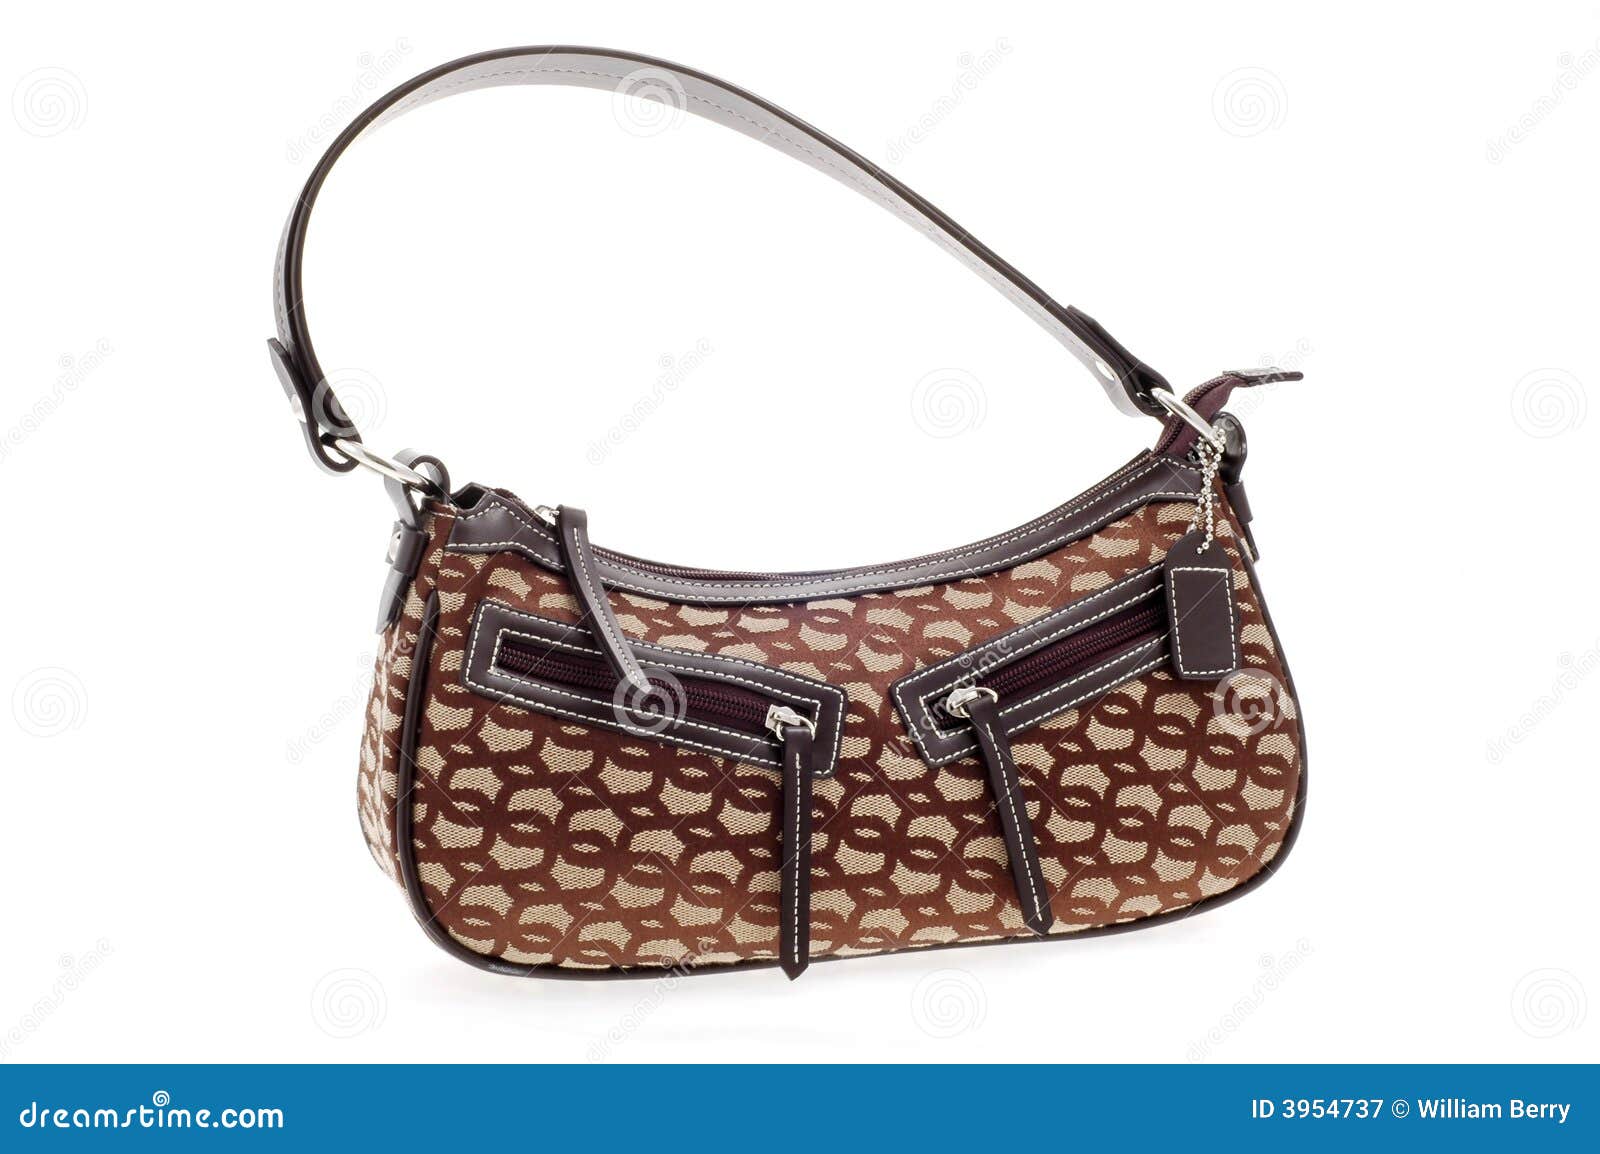 Stylish Handbags: Designer Handbags With Payment Plans